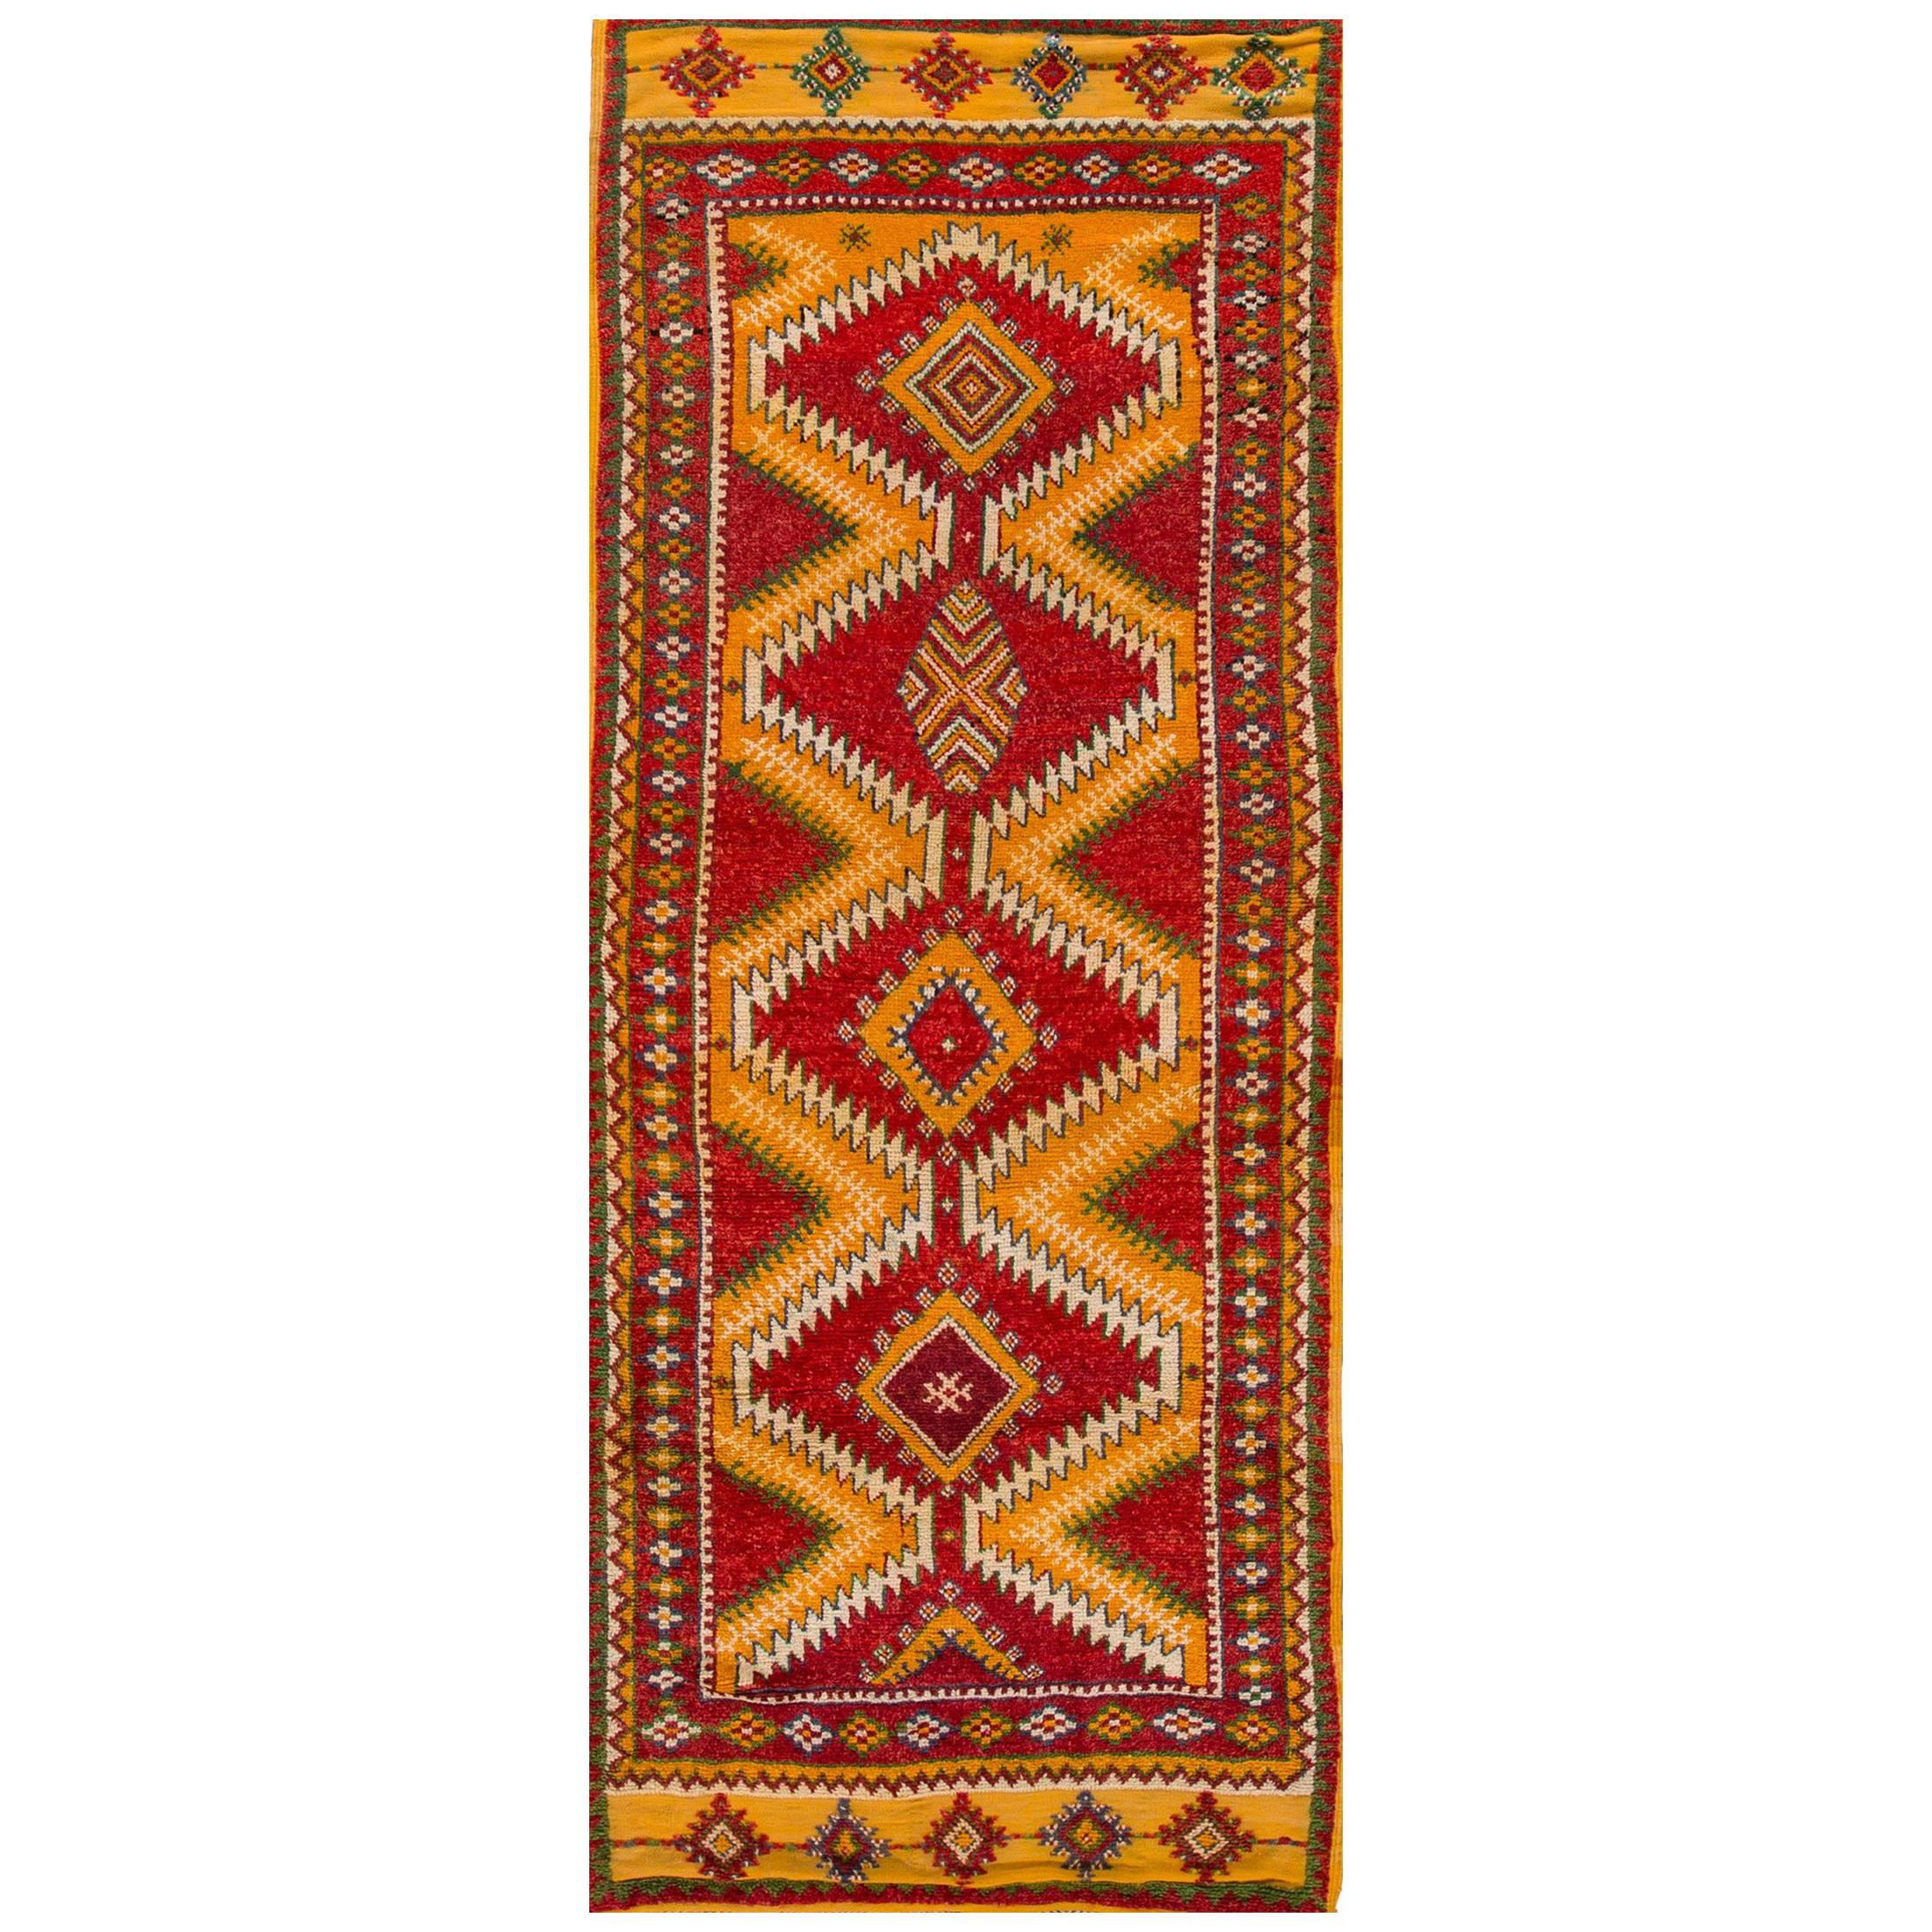 Vintage 1930s Red/Orange Moroccan Carpet Runner